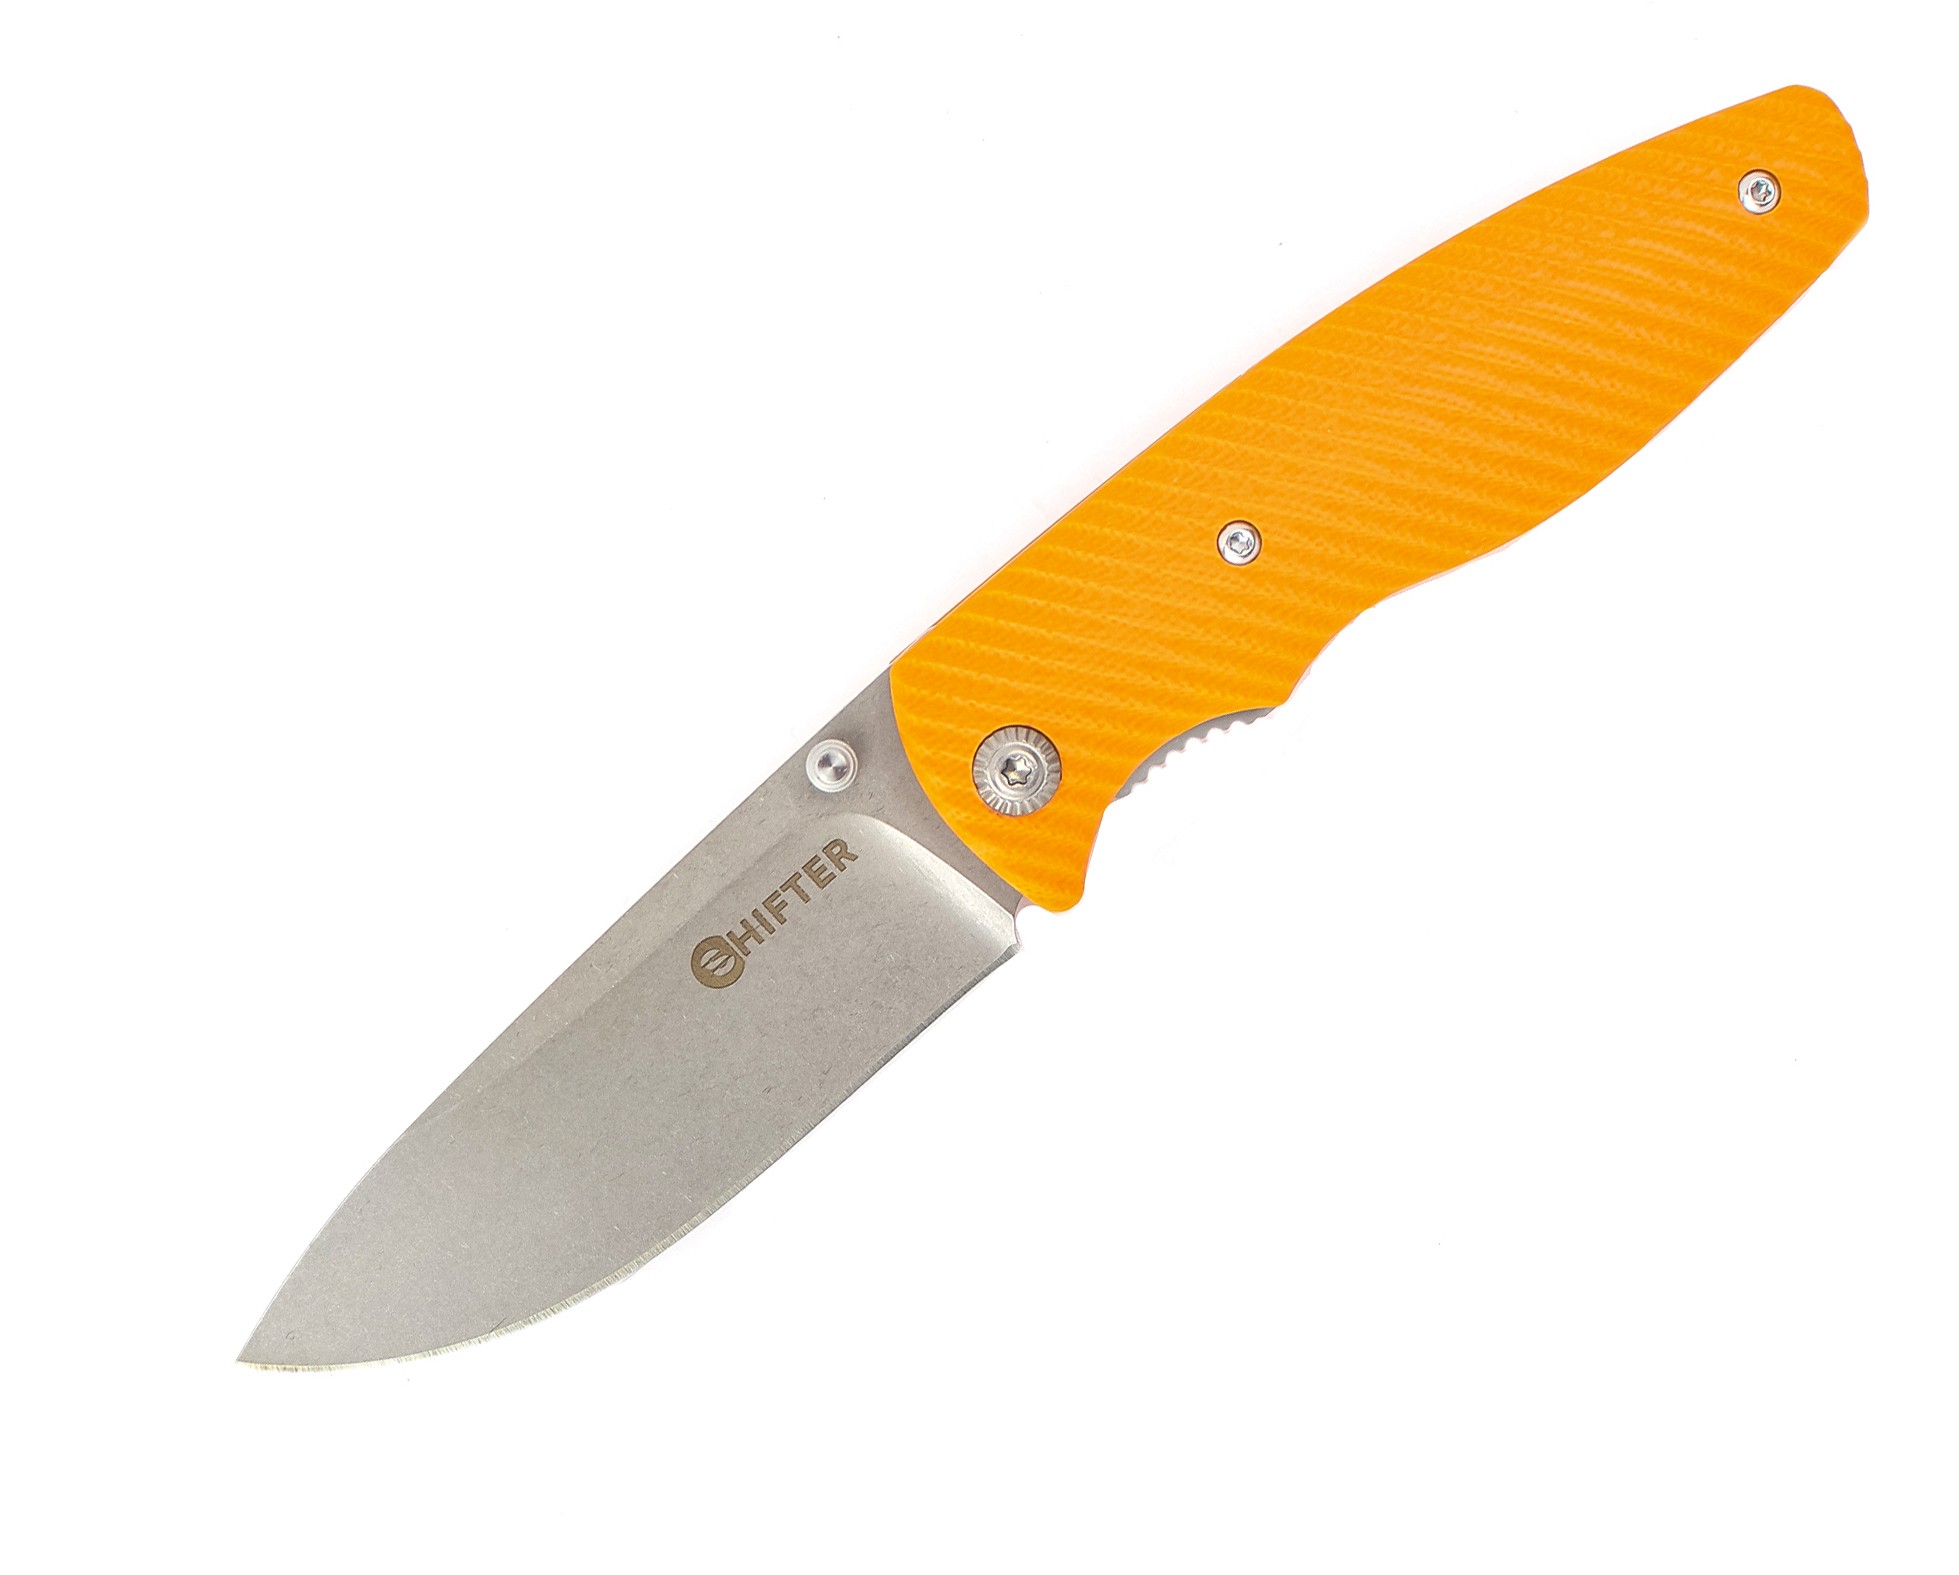 Нож Mr.Blade Zipper складной orange